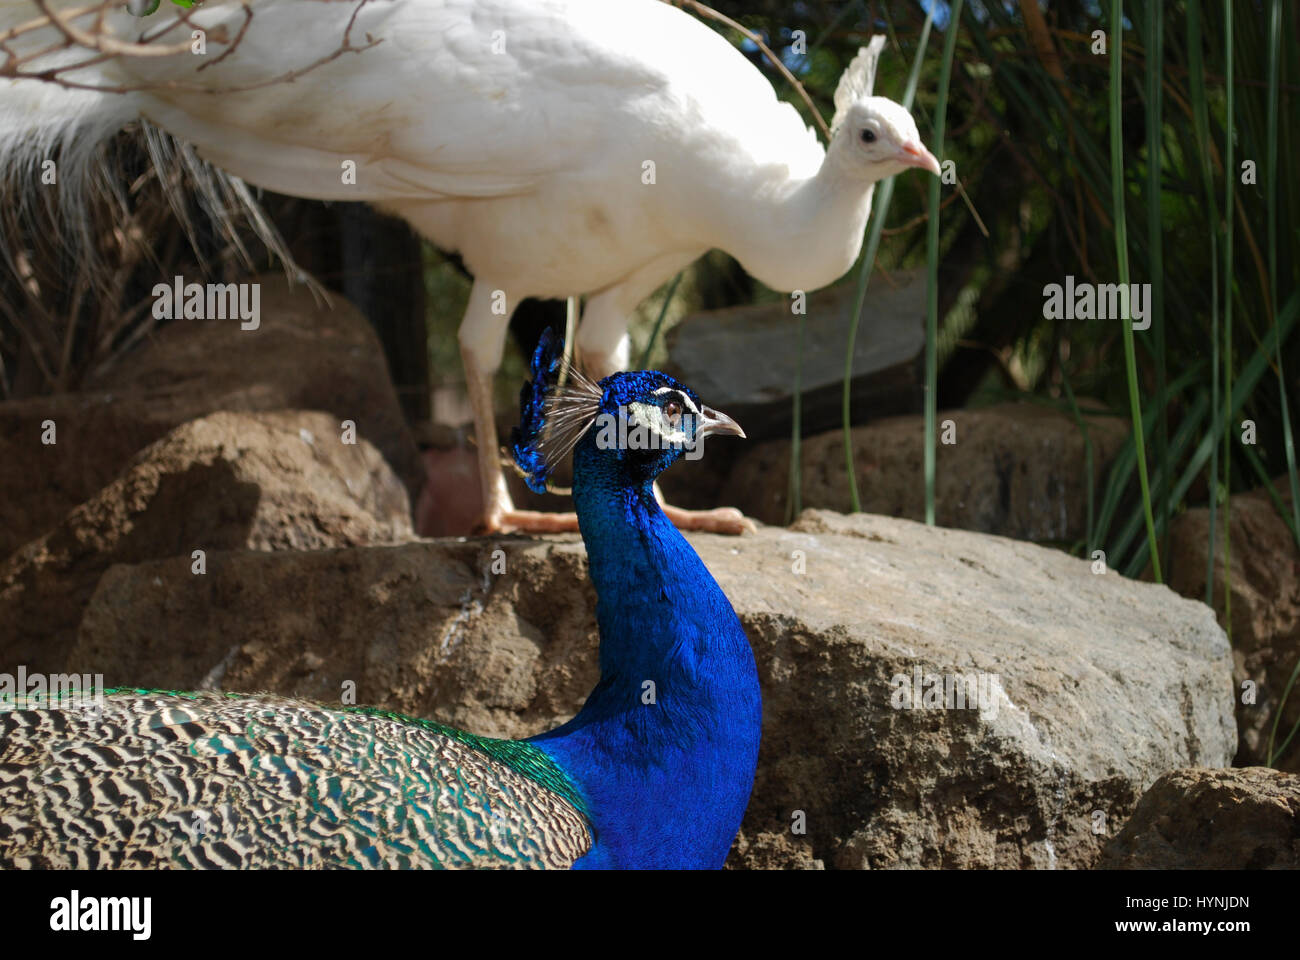 Indian peafowl or blue peafowl (Pavo cristatus) male on the White peafowl (Pavo cristatus alba) background. Stock Photo